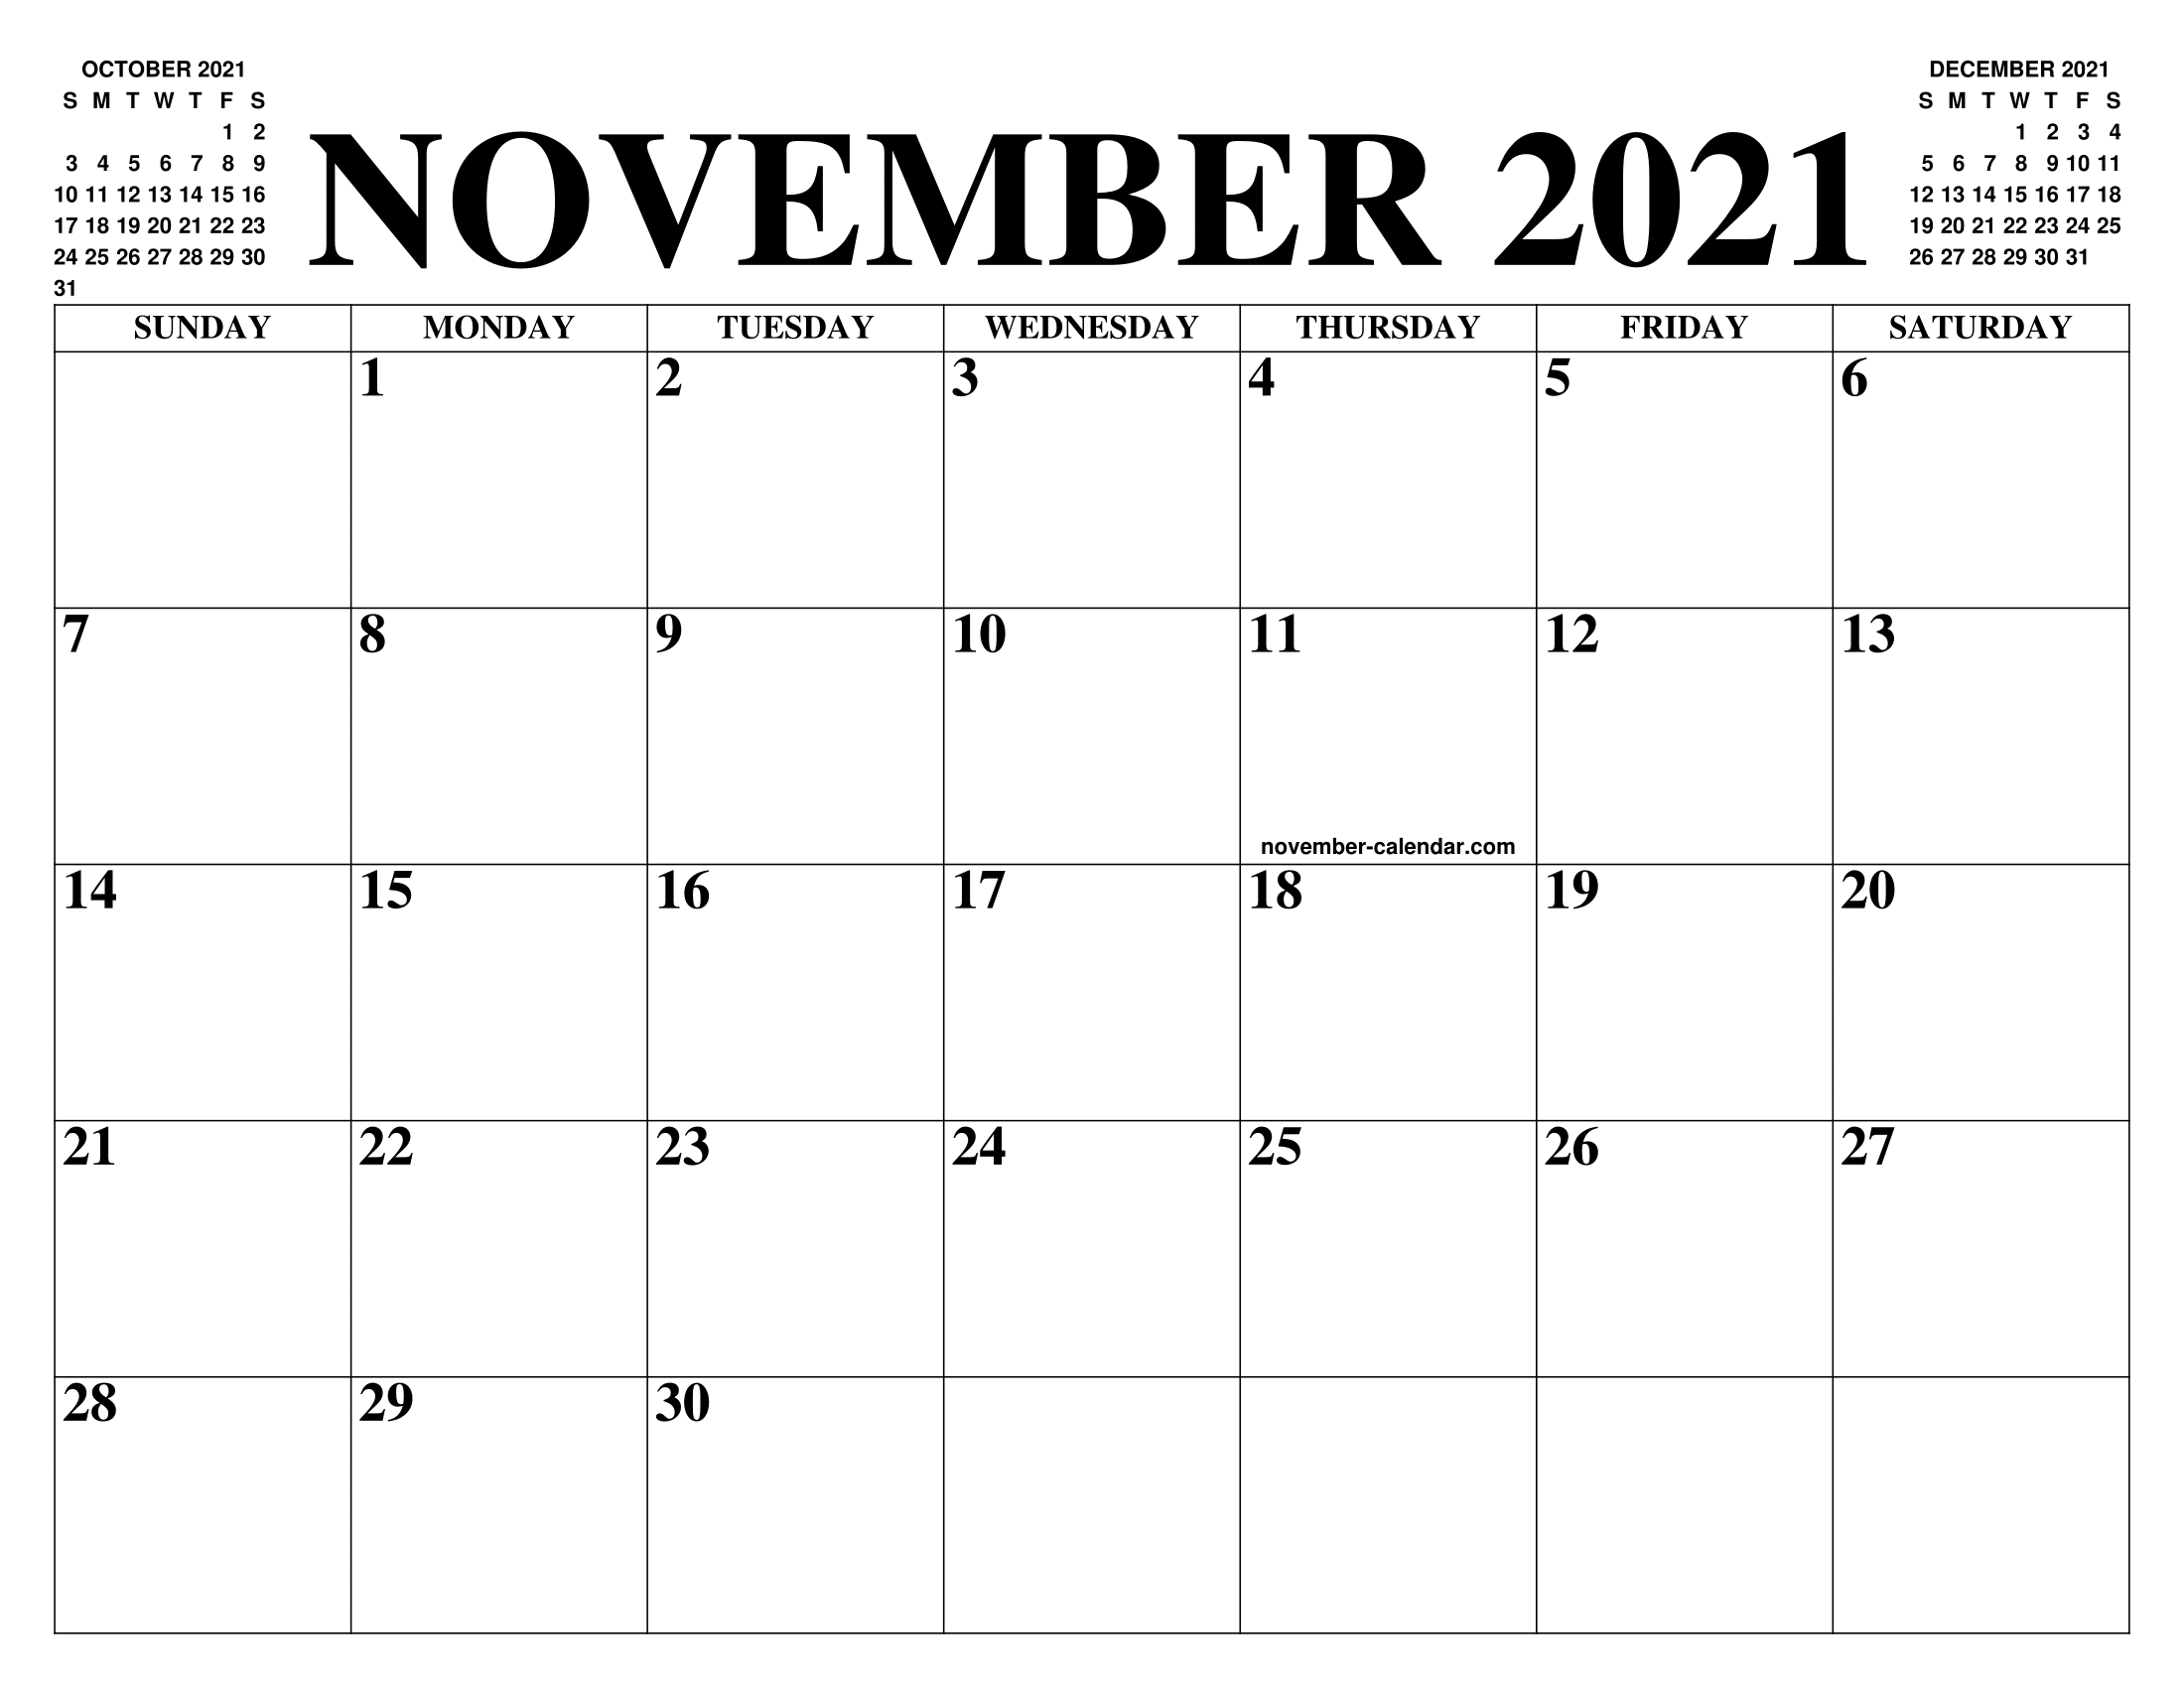 November 2021 Calendar Wallpapers - Wallpaper Cave